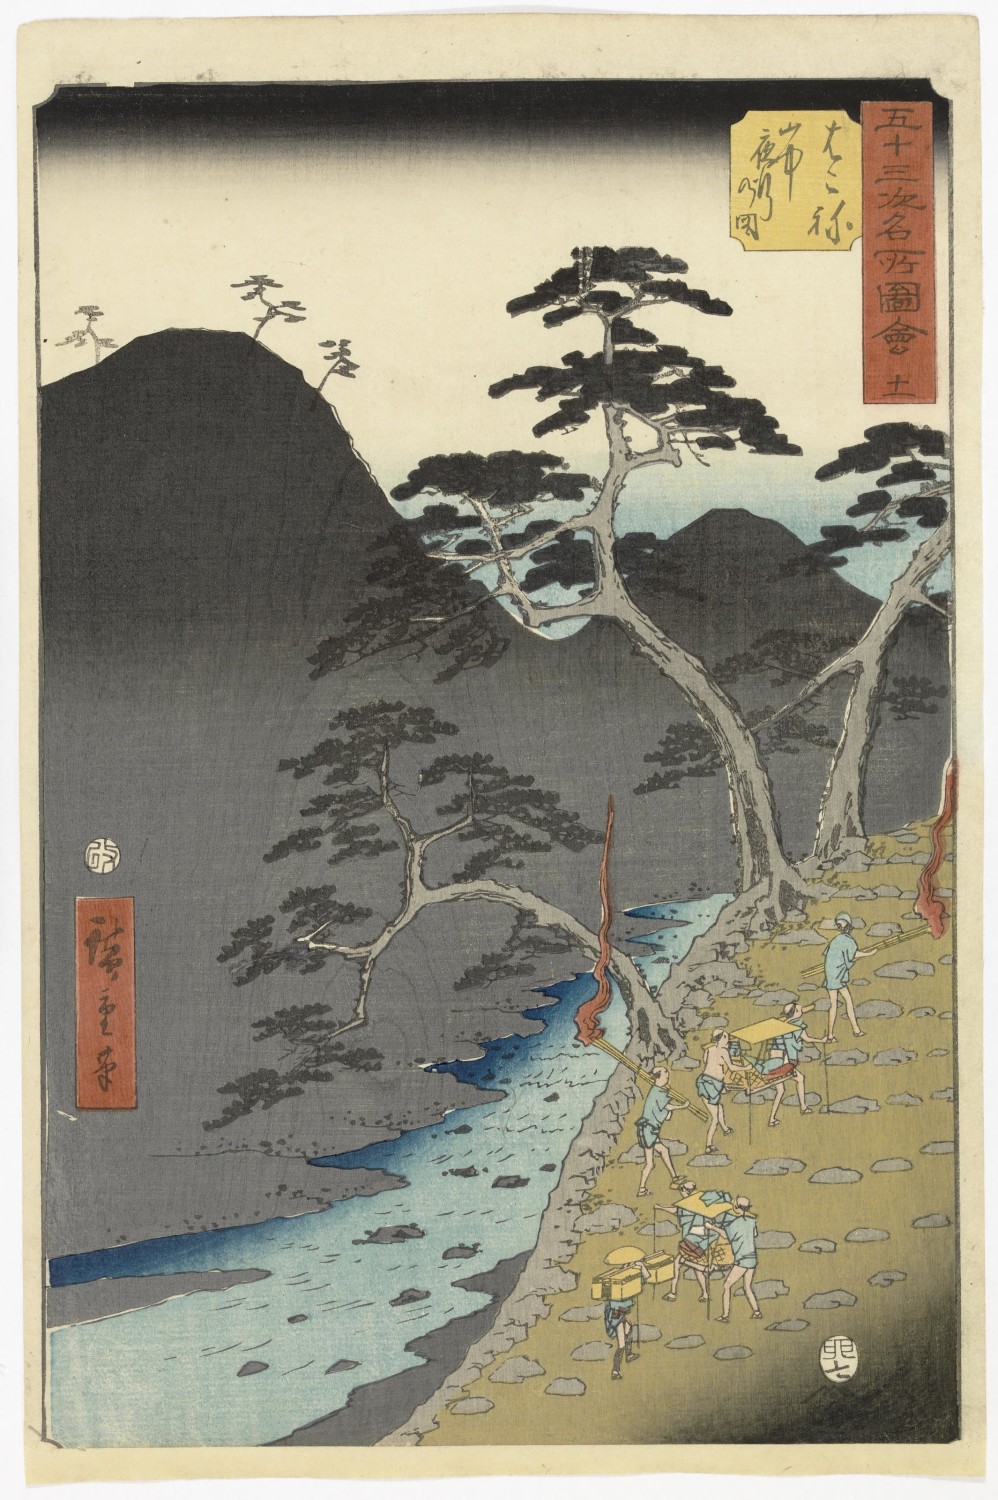 Ando Hiroshige, Hakone from Upright Tokaido